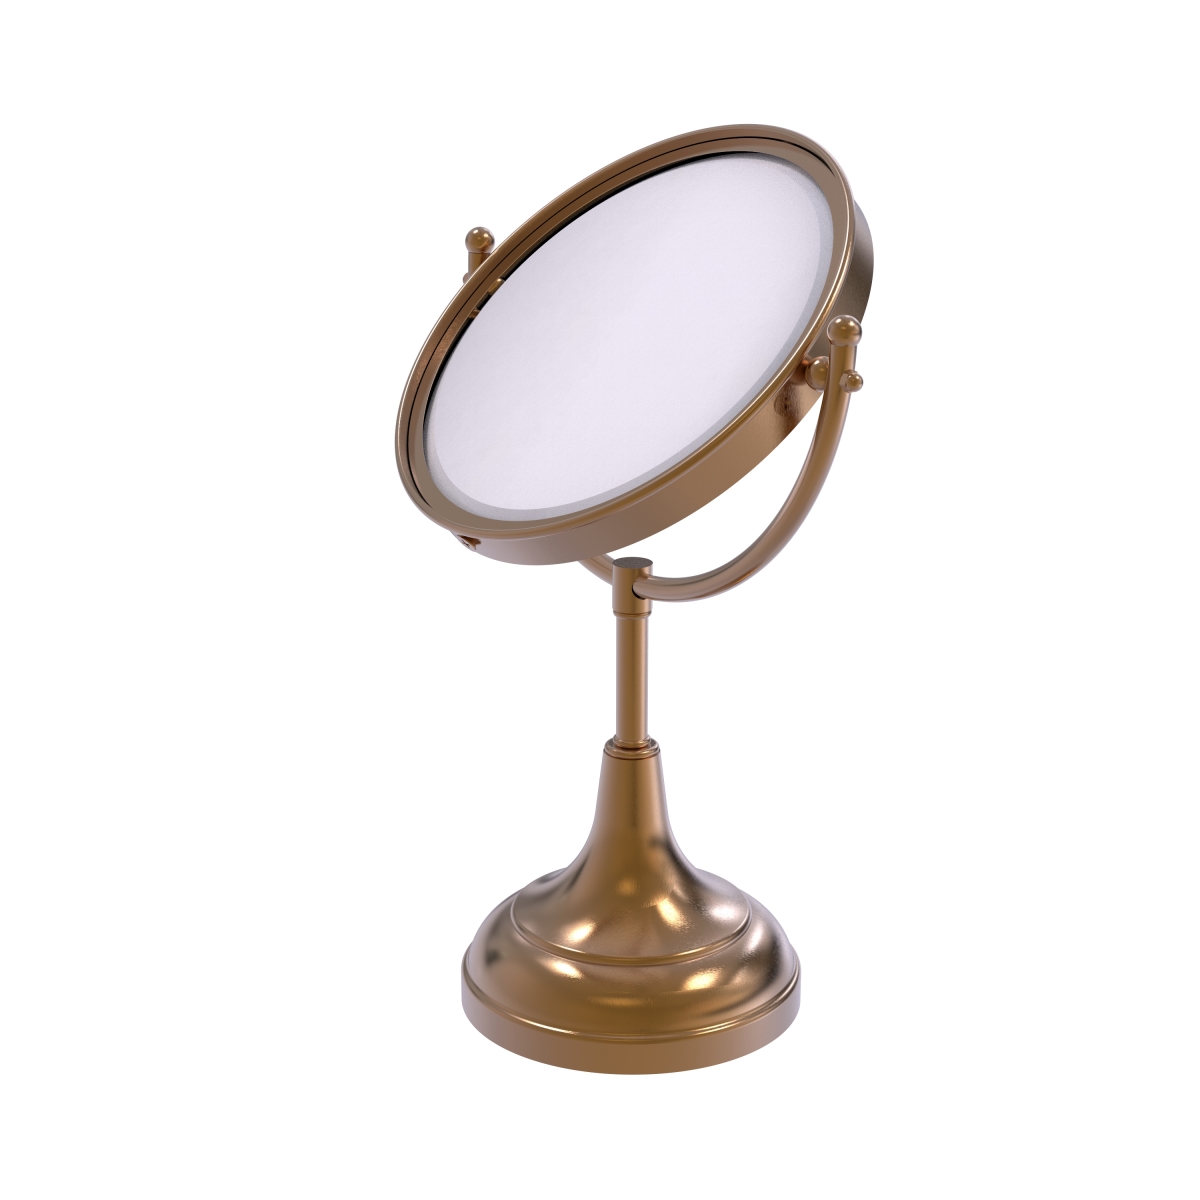 Dm-2-4x-bbr 8 In. Vanity Top Make-up Mirror 4x Magnification, Brushed Bronze